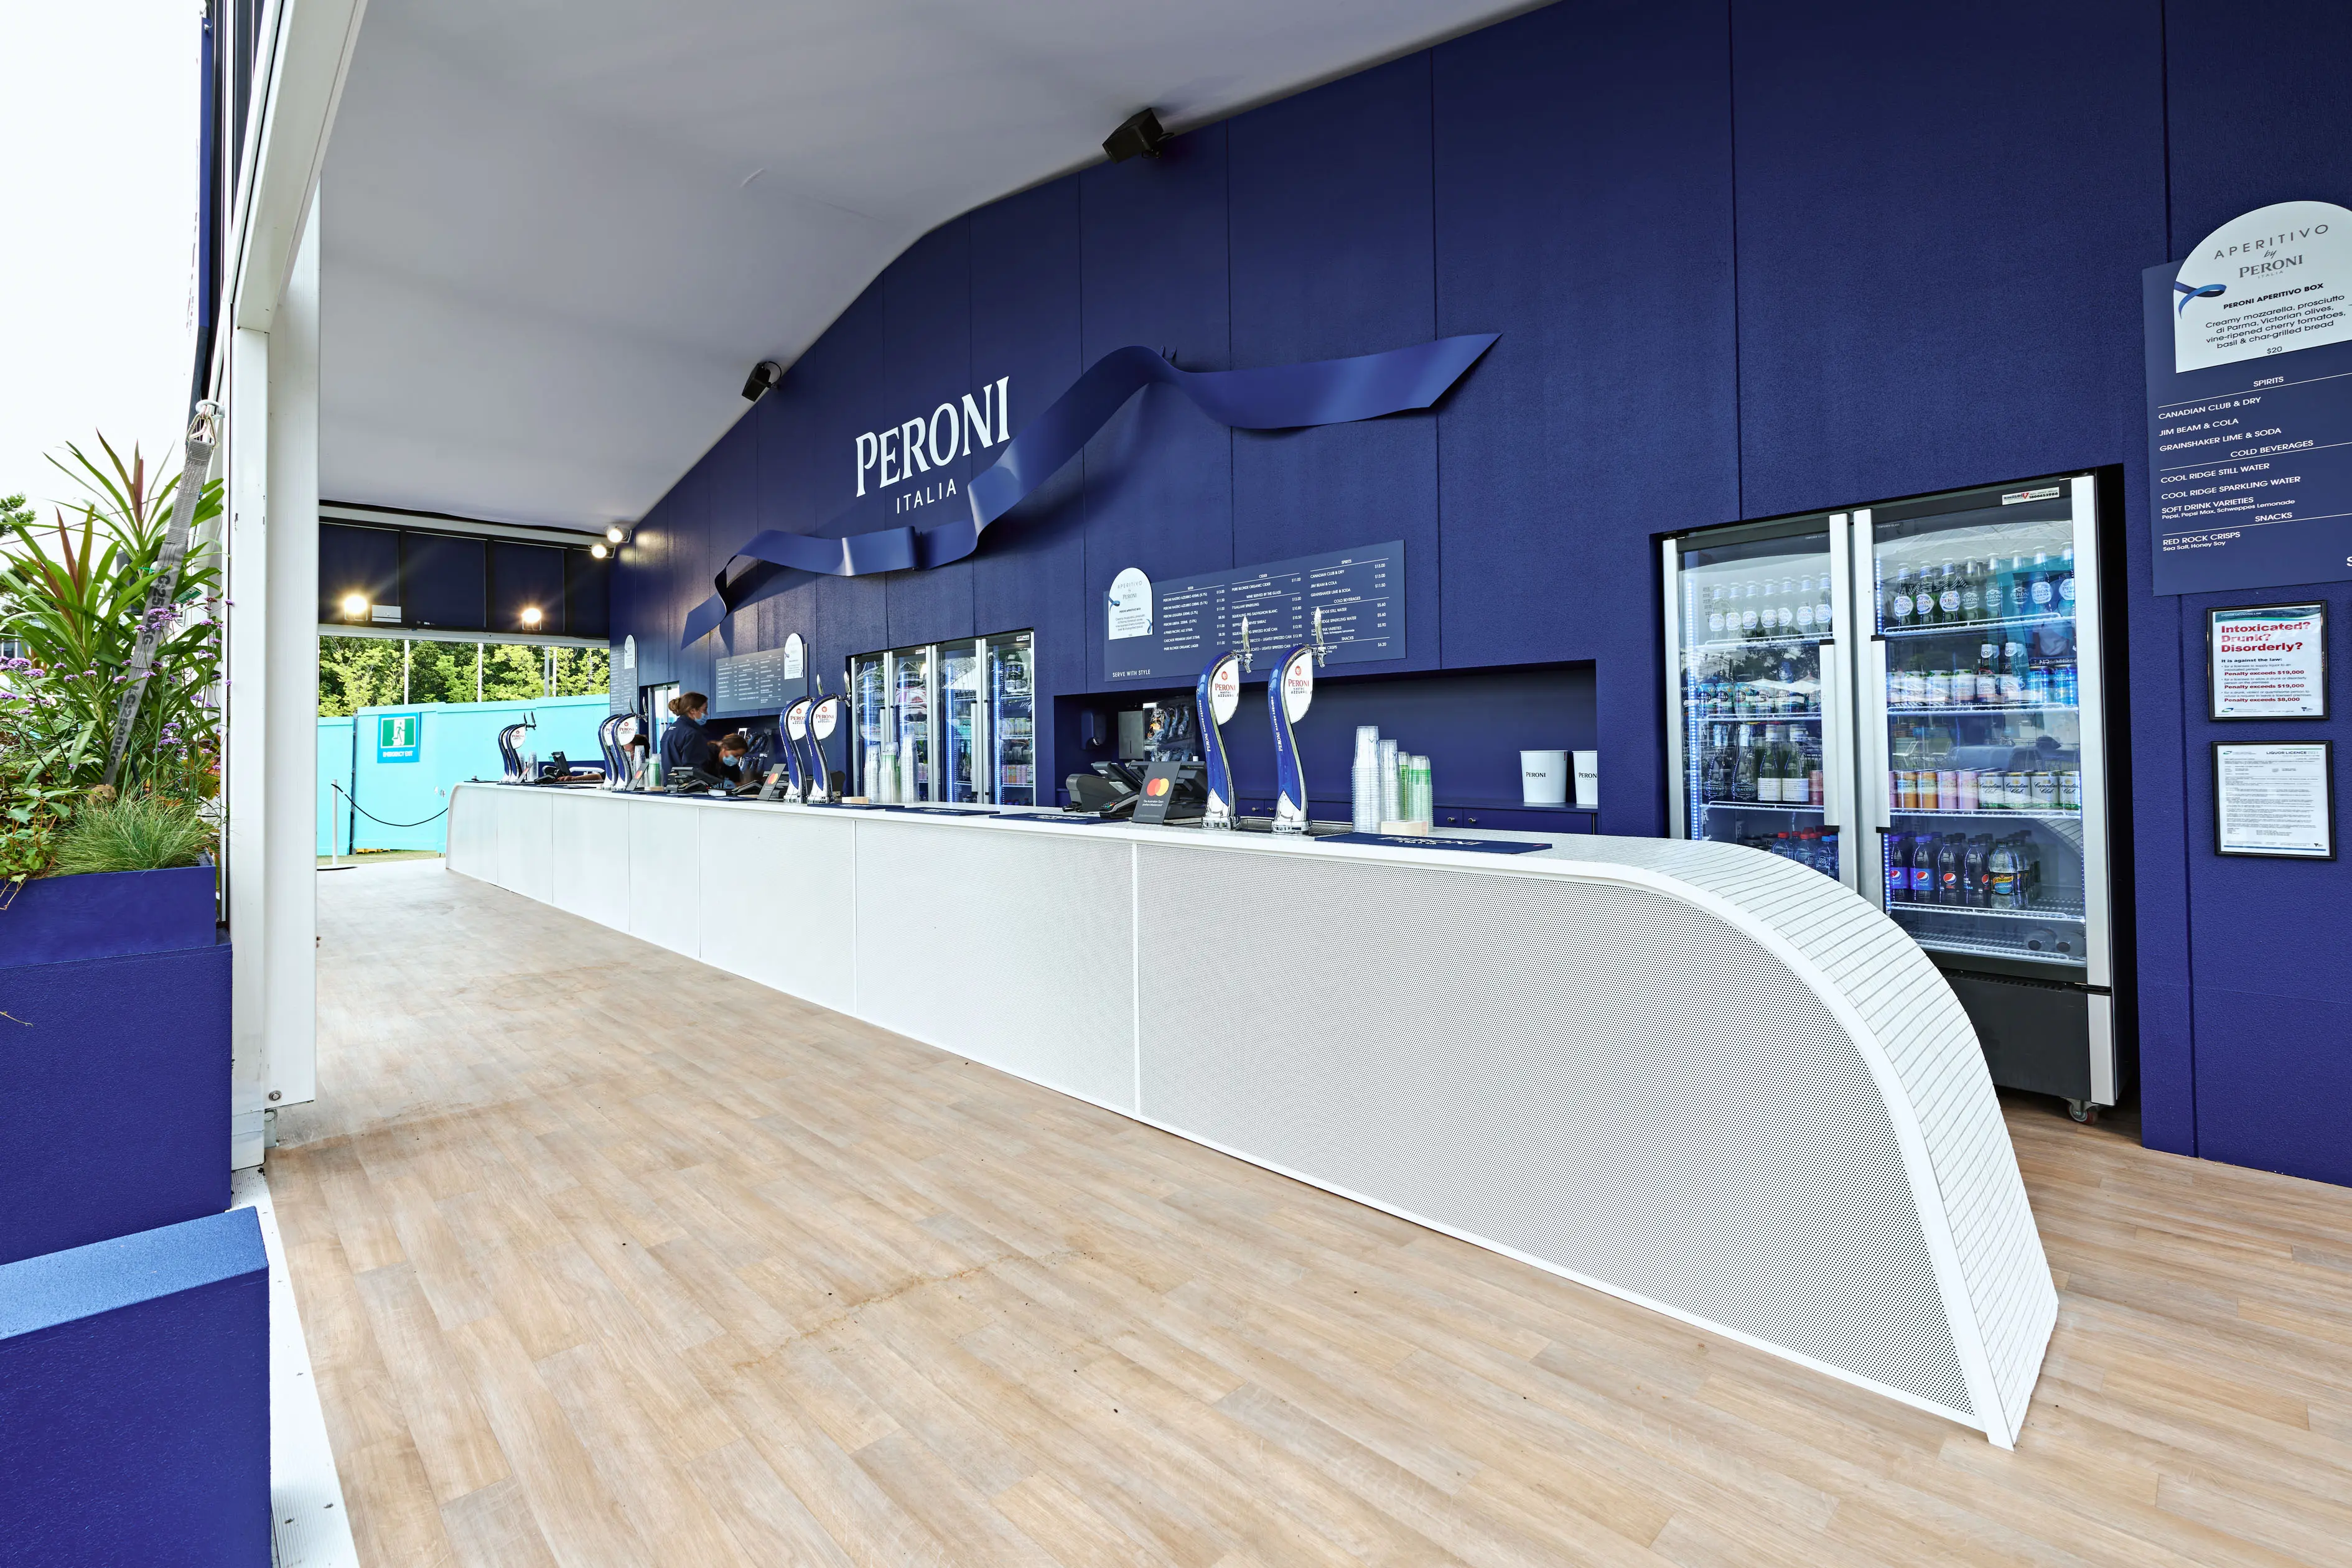 Peroni Australian Open - brand activation, event production, fabrication and build - Melbourne Park, Australia